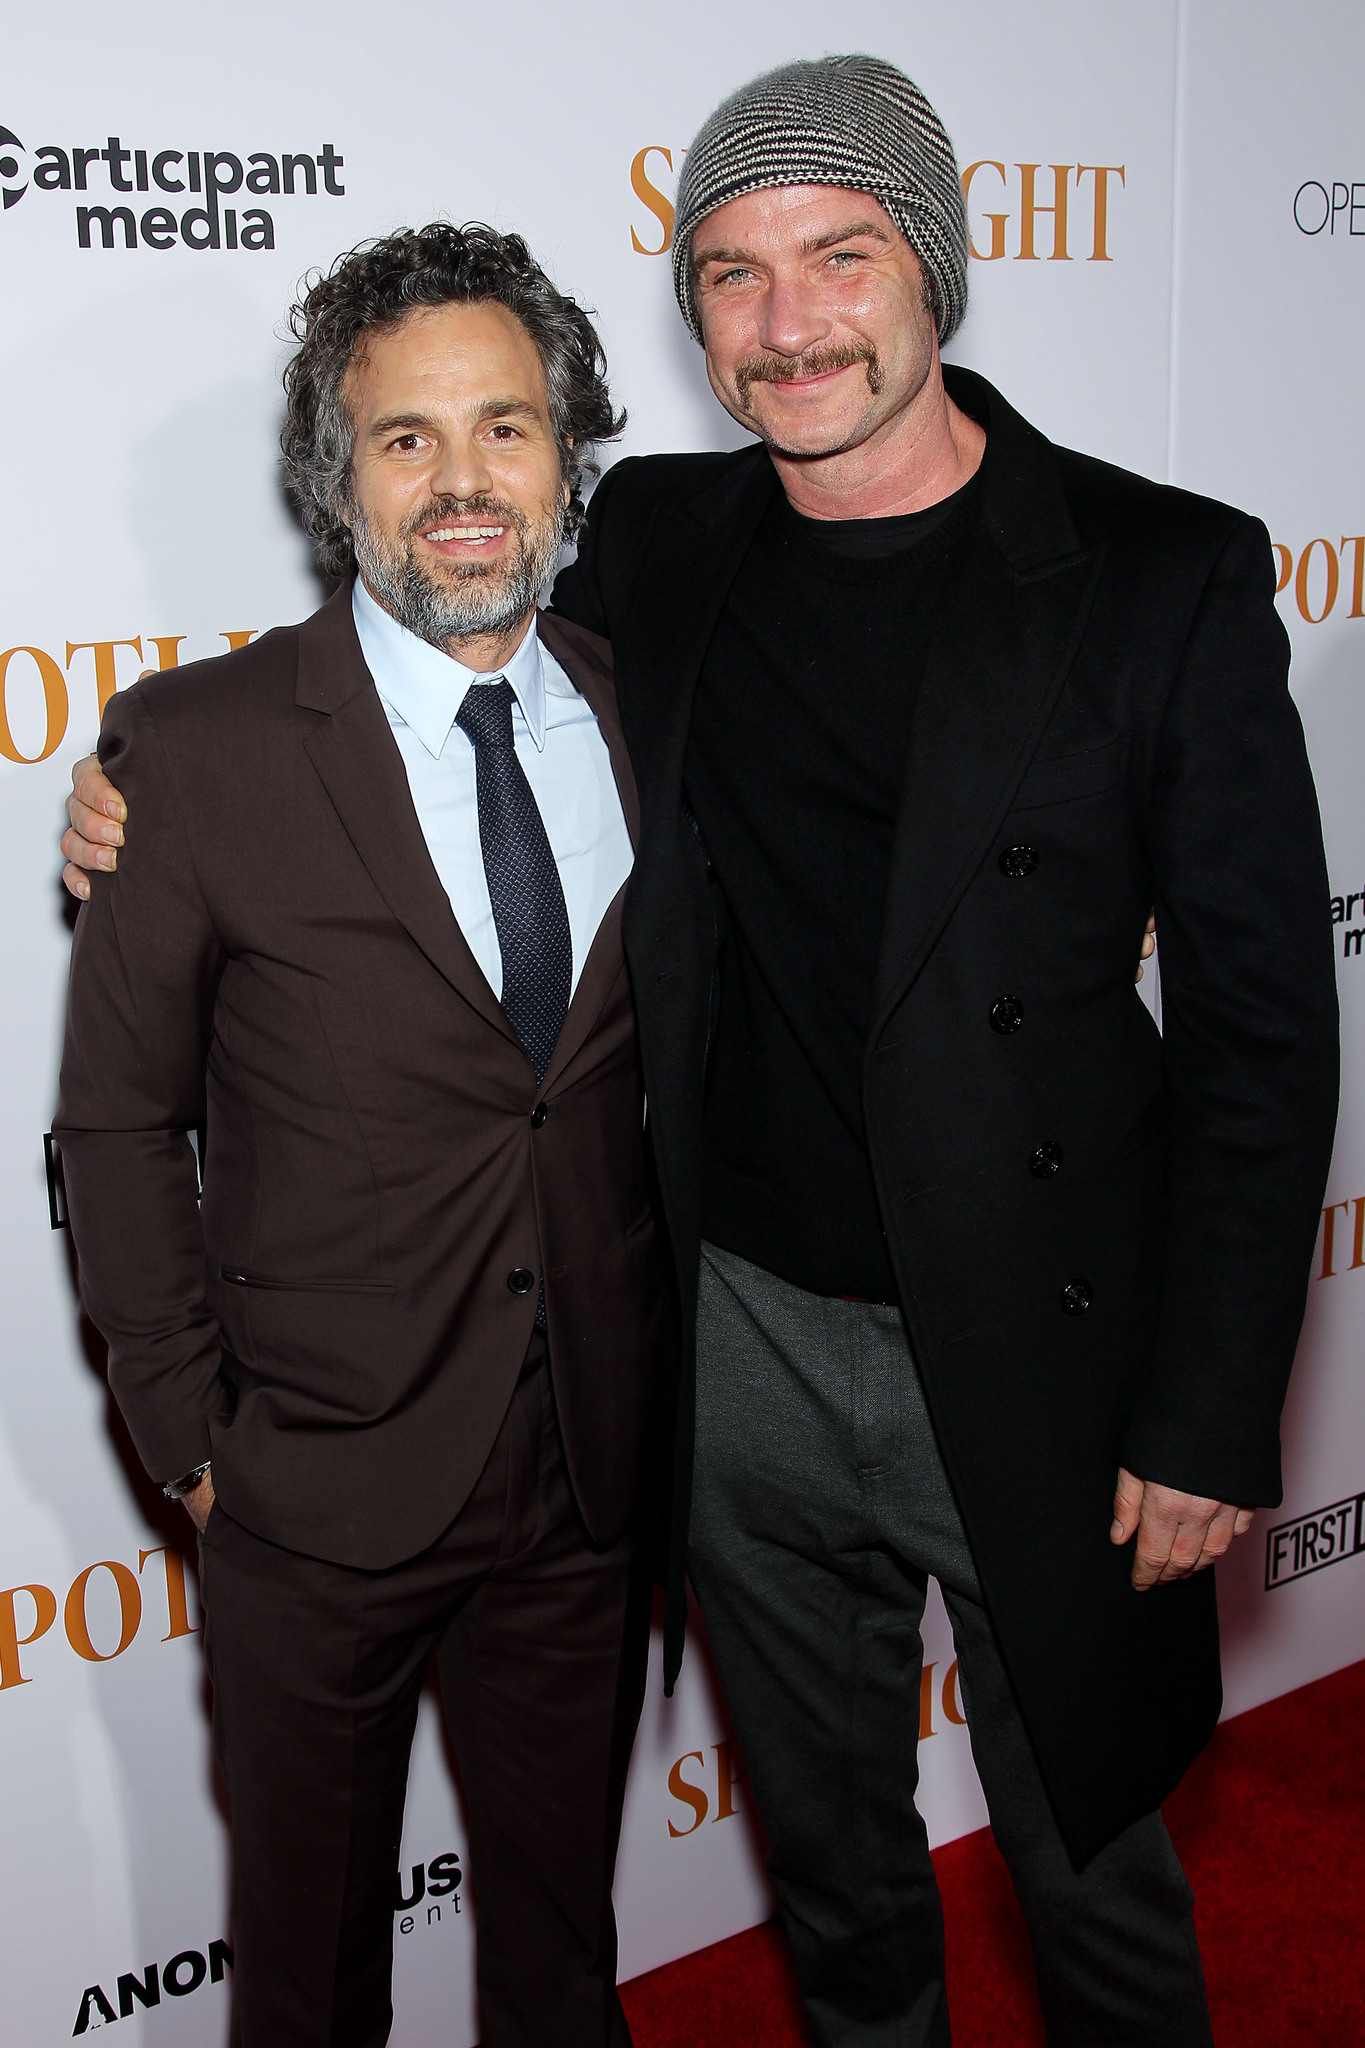 Liev Schreiber and Mark Ruffalo at event of Spotlight (2015)